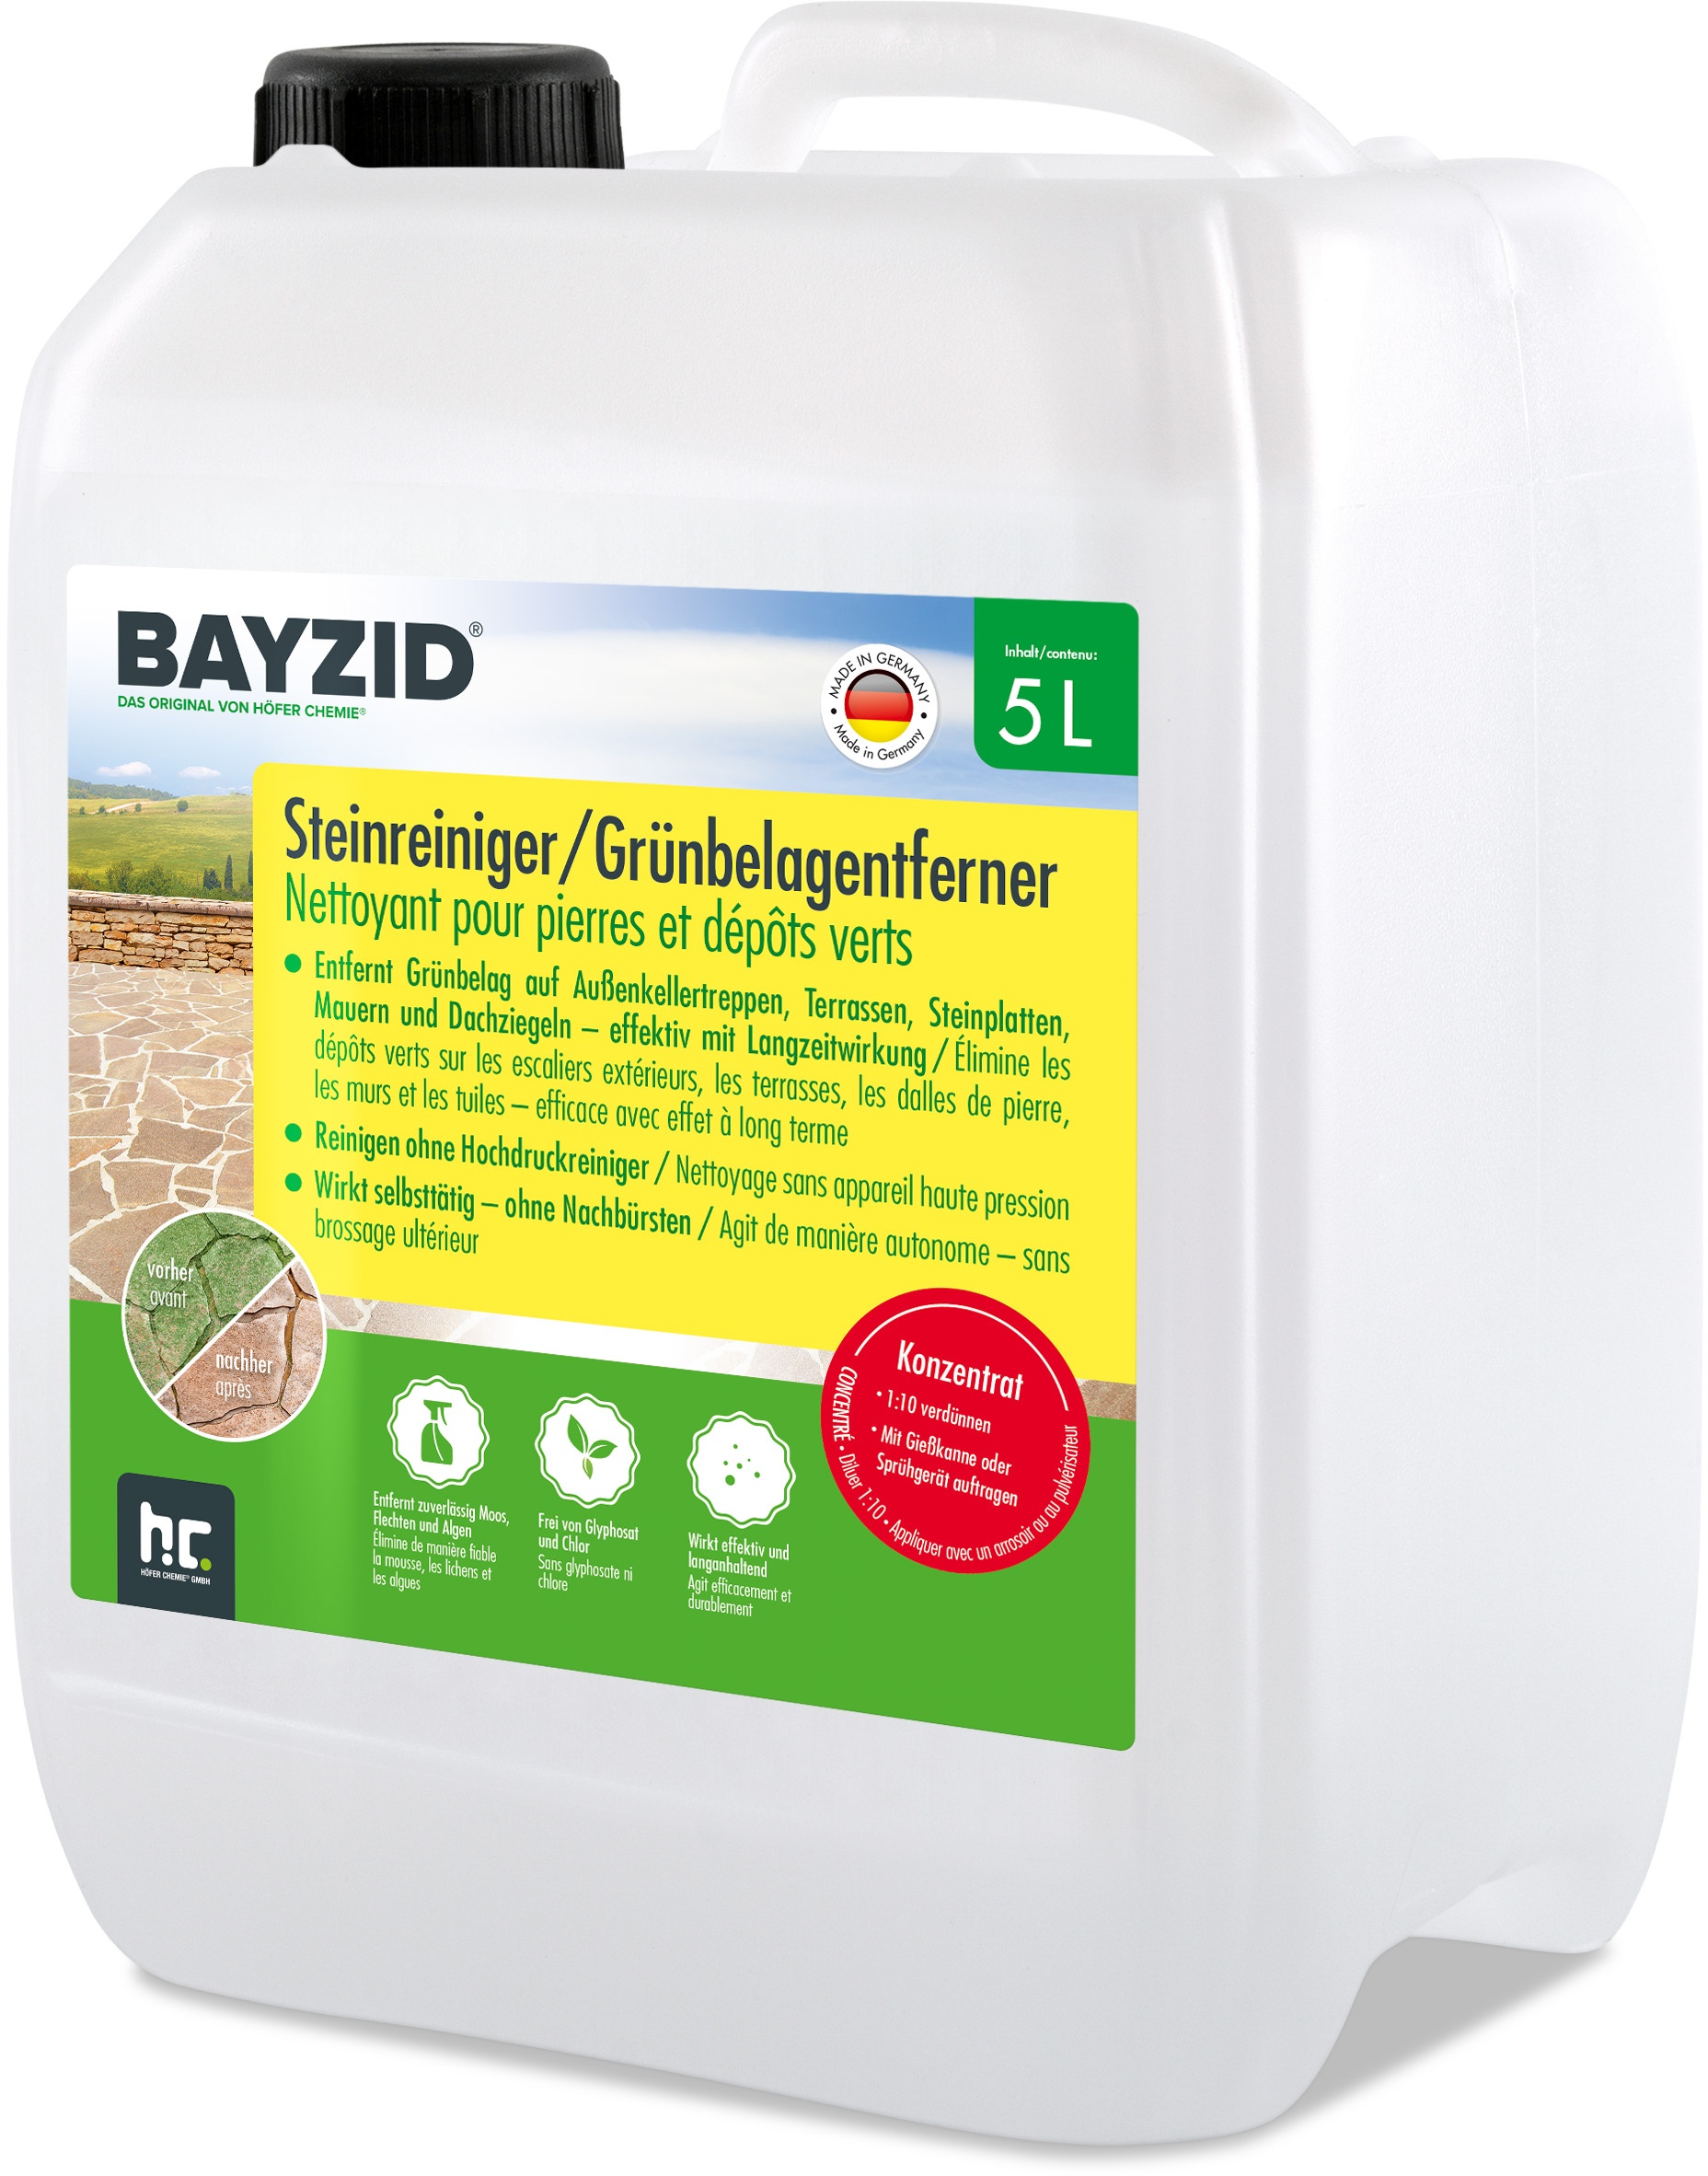 2 x 5 L Bayzid® Steinreiniger / Grünbelag-Entferner